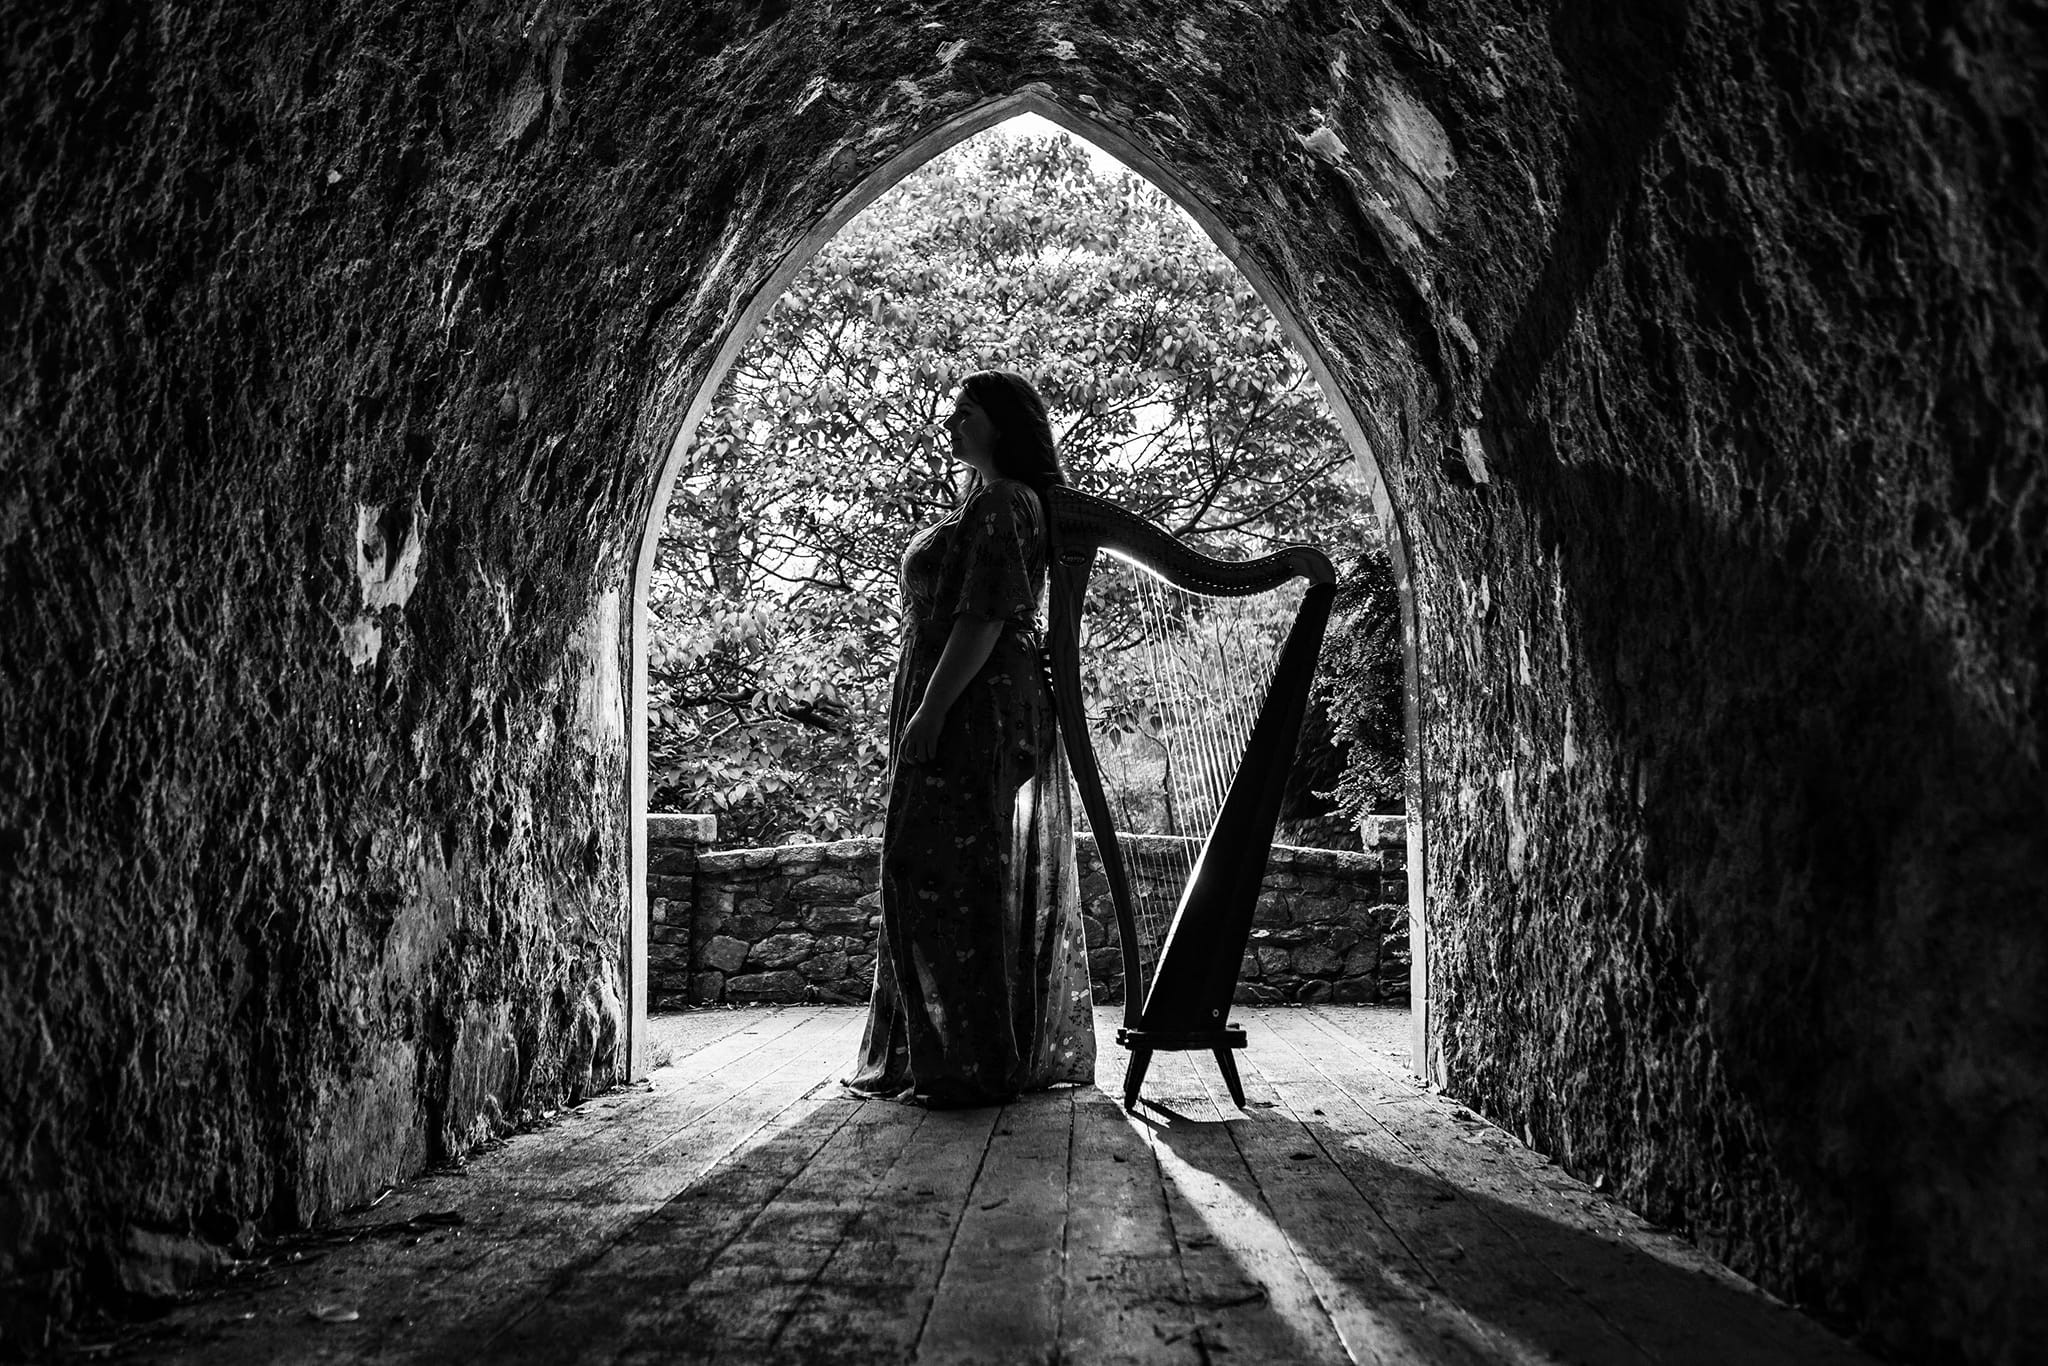 Sarah McVeigh Wedding Singer & Harpist